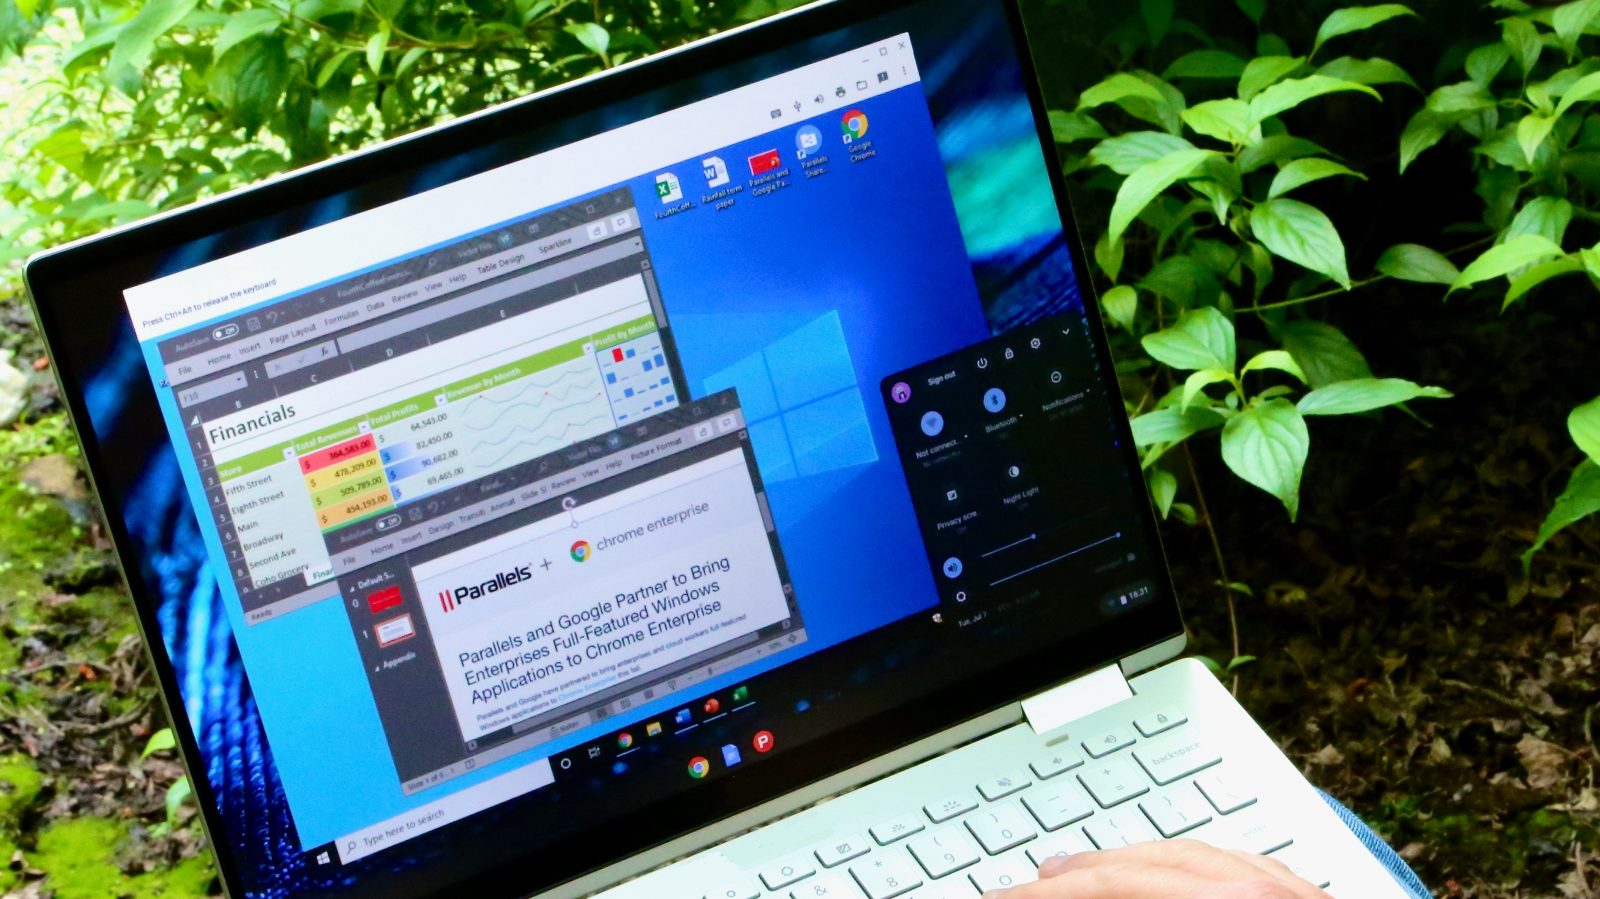 Parallels lets enterprise run Windows on Chromebooks - 9to5Google